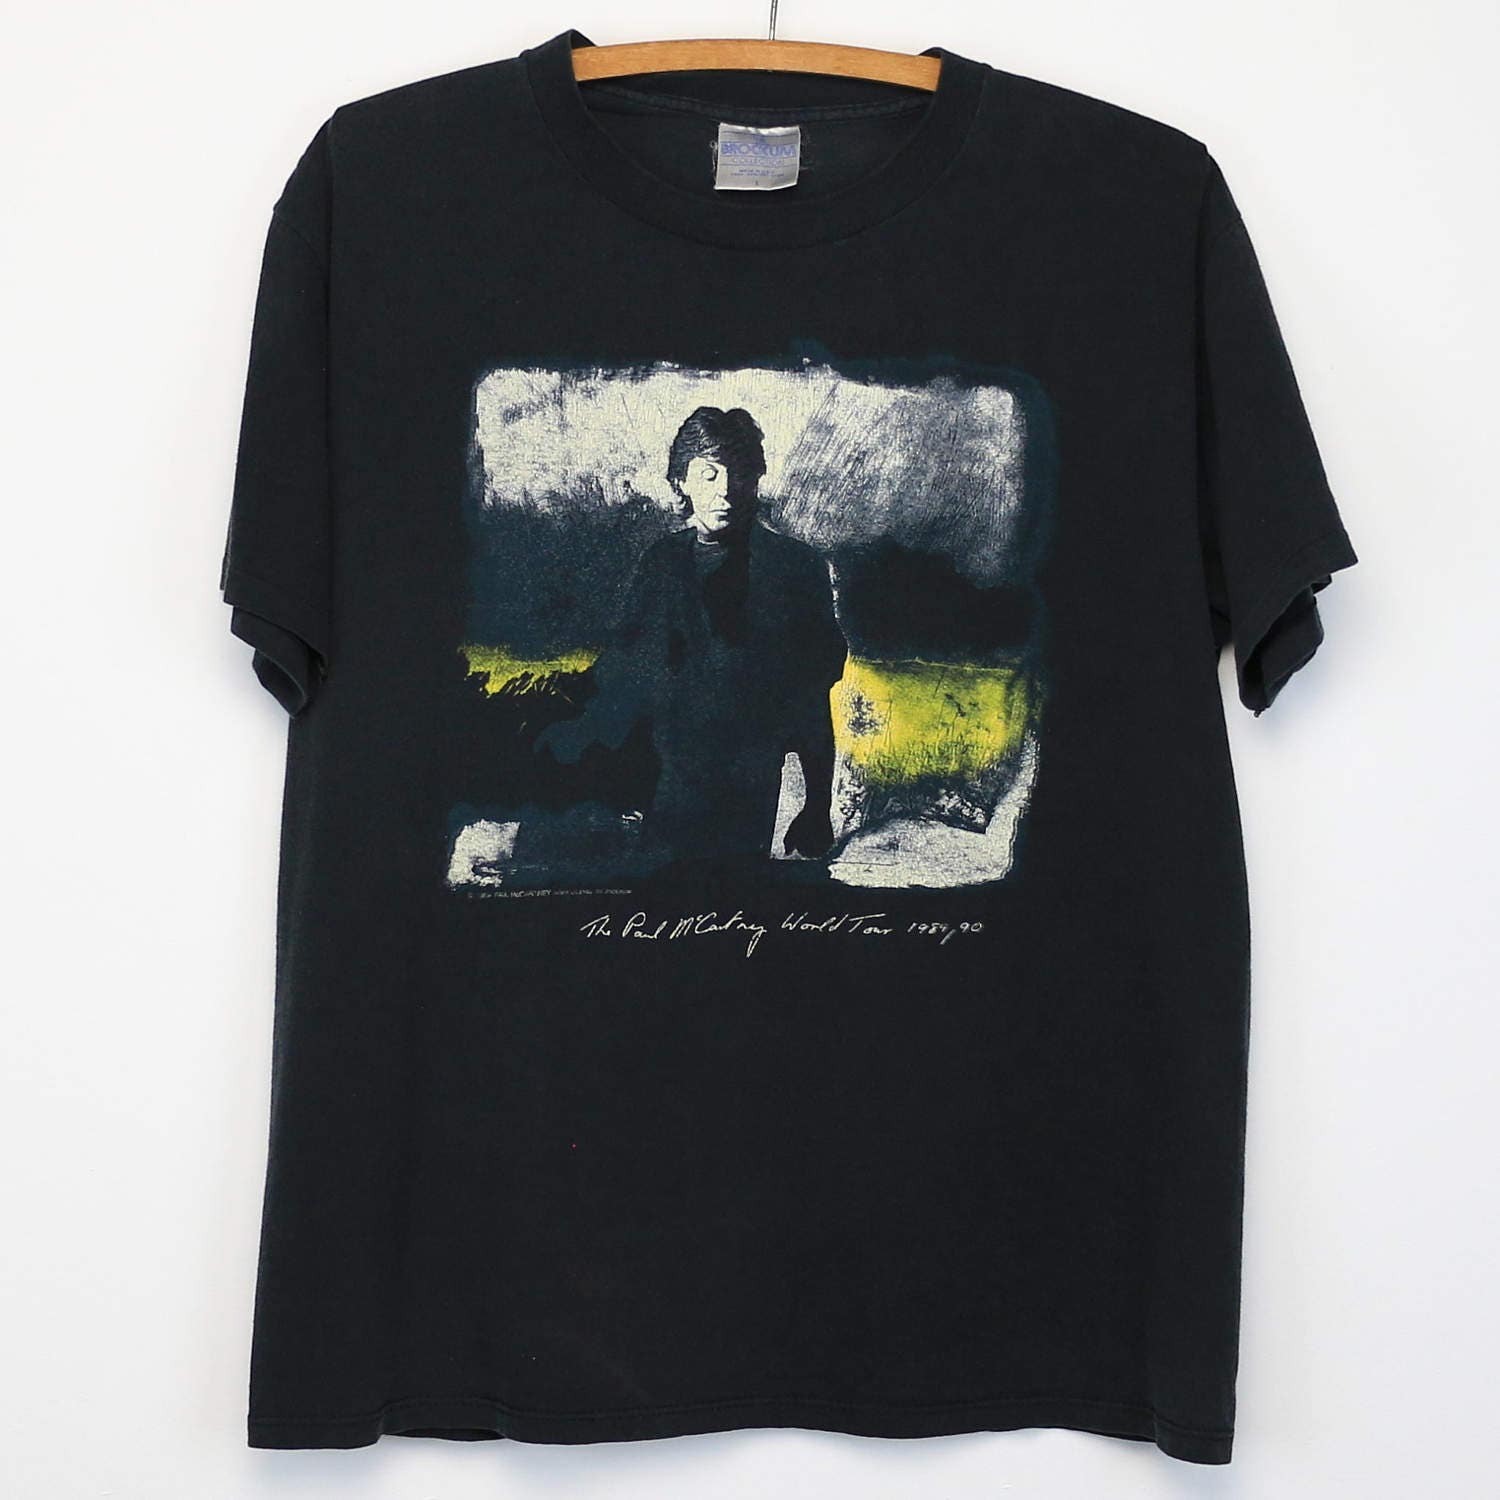 Paul McCartney Shirt Vintage tshirt 1989 World Tour concert | Etsy